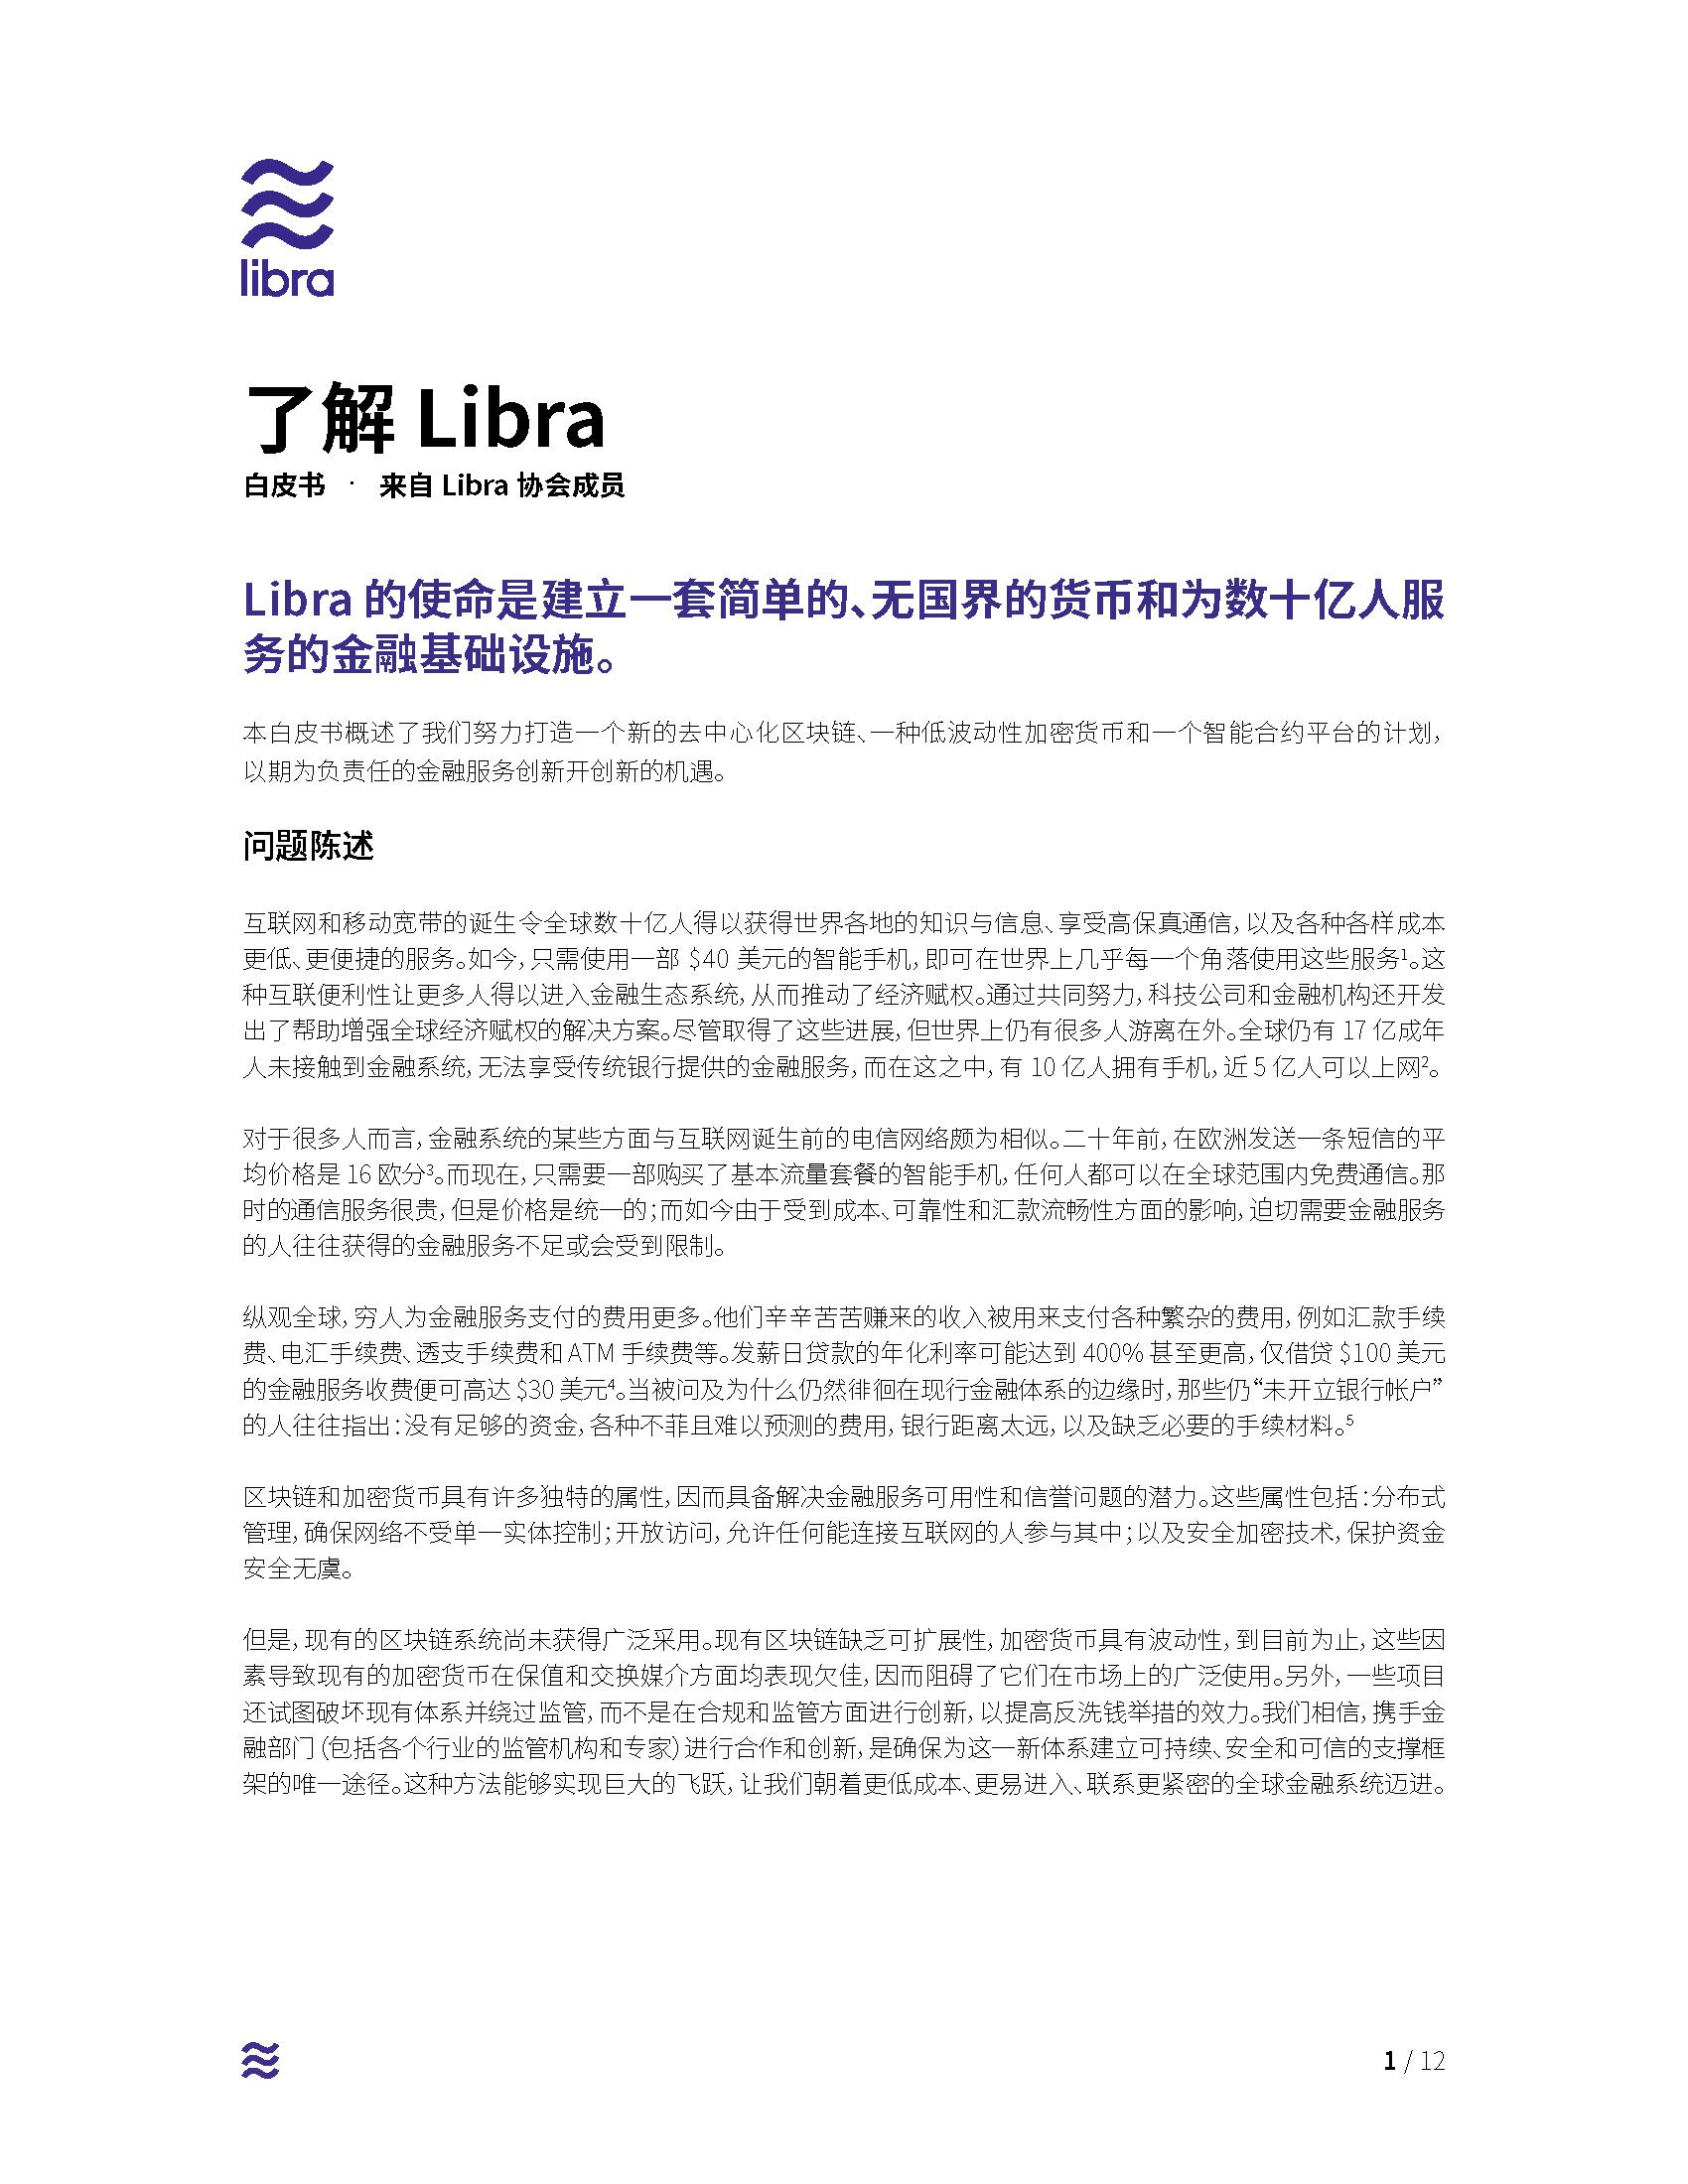 Facebook加密货币项目Libra中文白皮书配图(1)